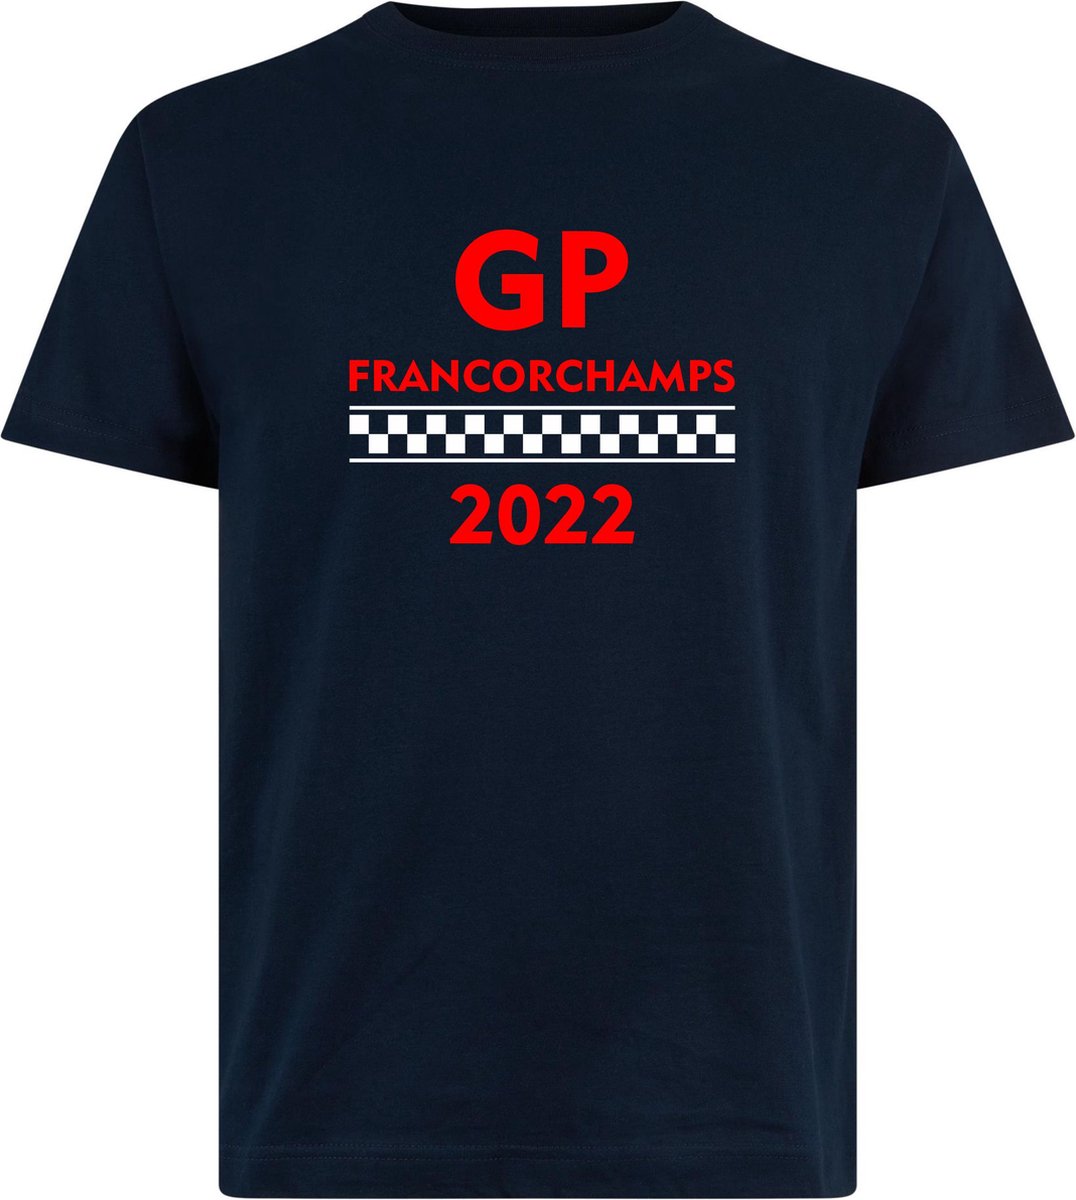 T-shirt GP Francorchamps 2022 | Max Verstappen / Red Bull Racing / Formule 1 fan | Grand Prix Circuit Spa-Francorchamps | kleding shirt | Navy | maat XXL